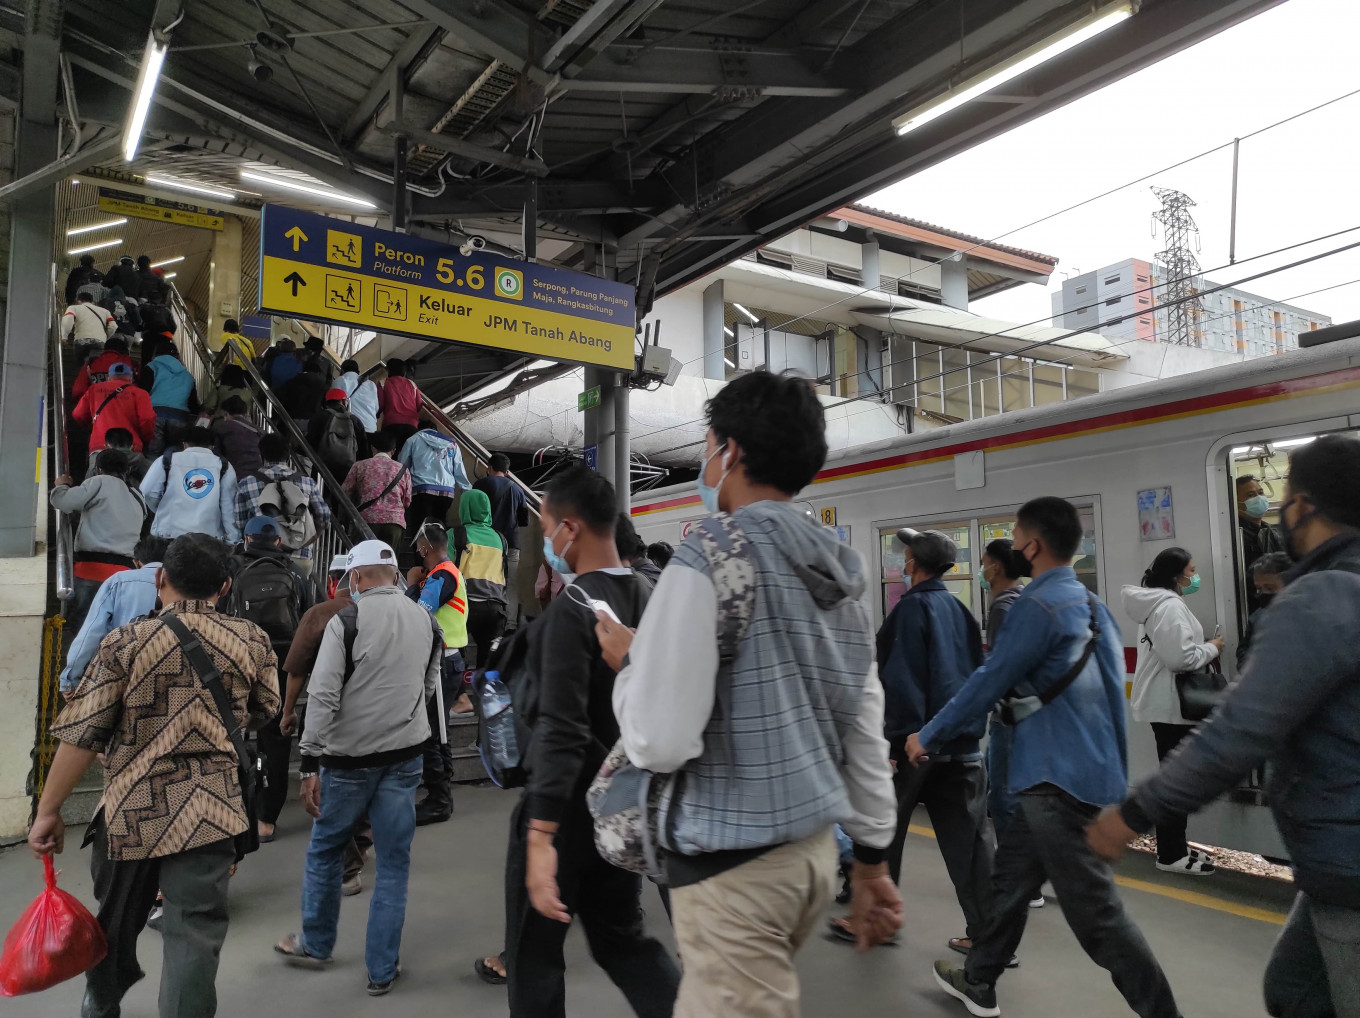 Stasiun kereta api baru diusulkan untuk Tanah Abang – Jakarta